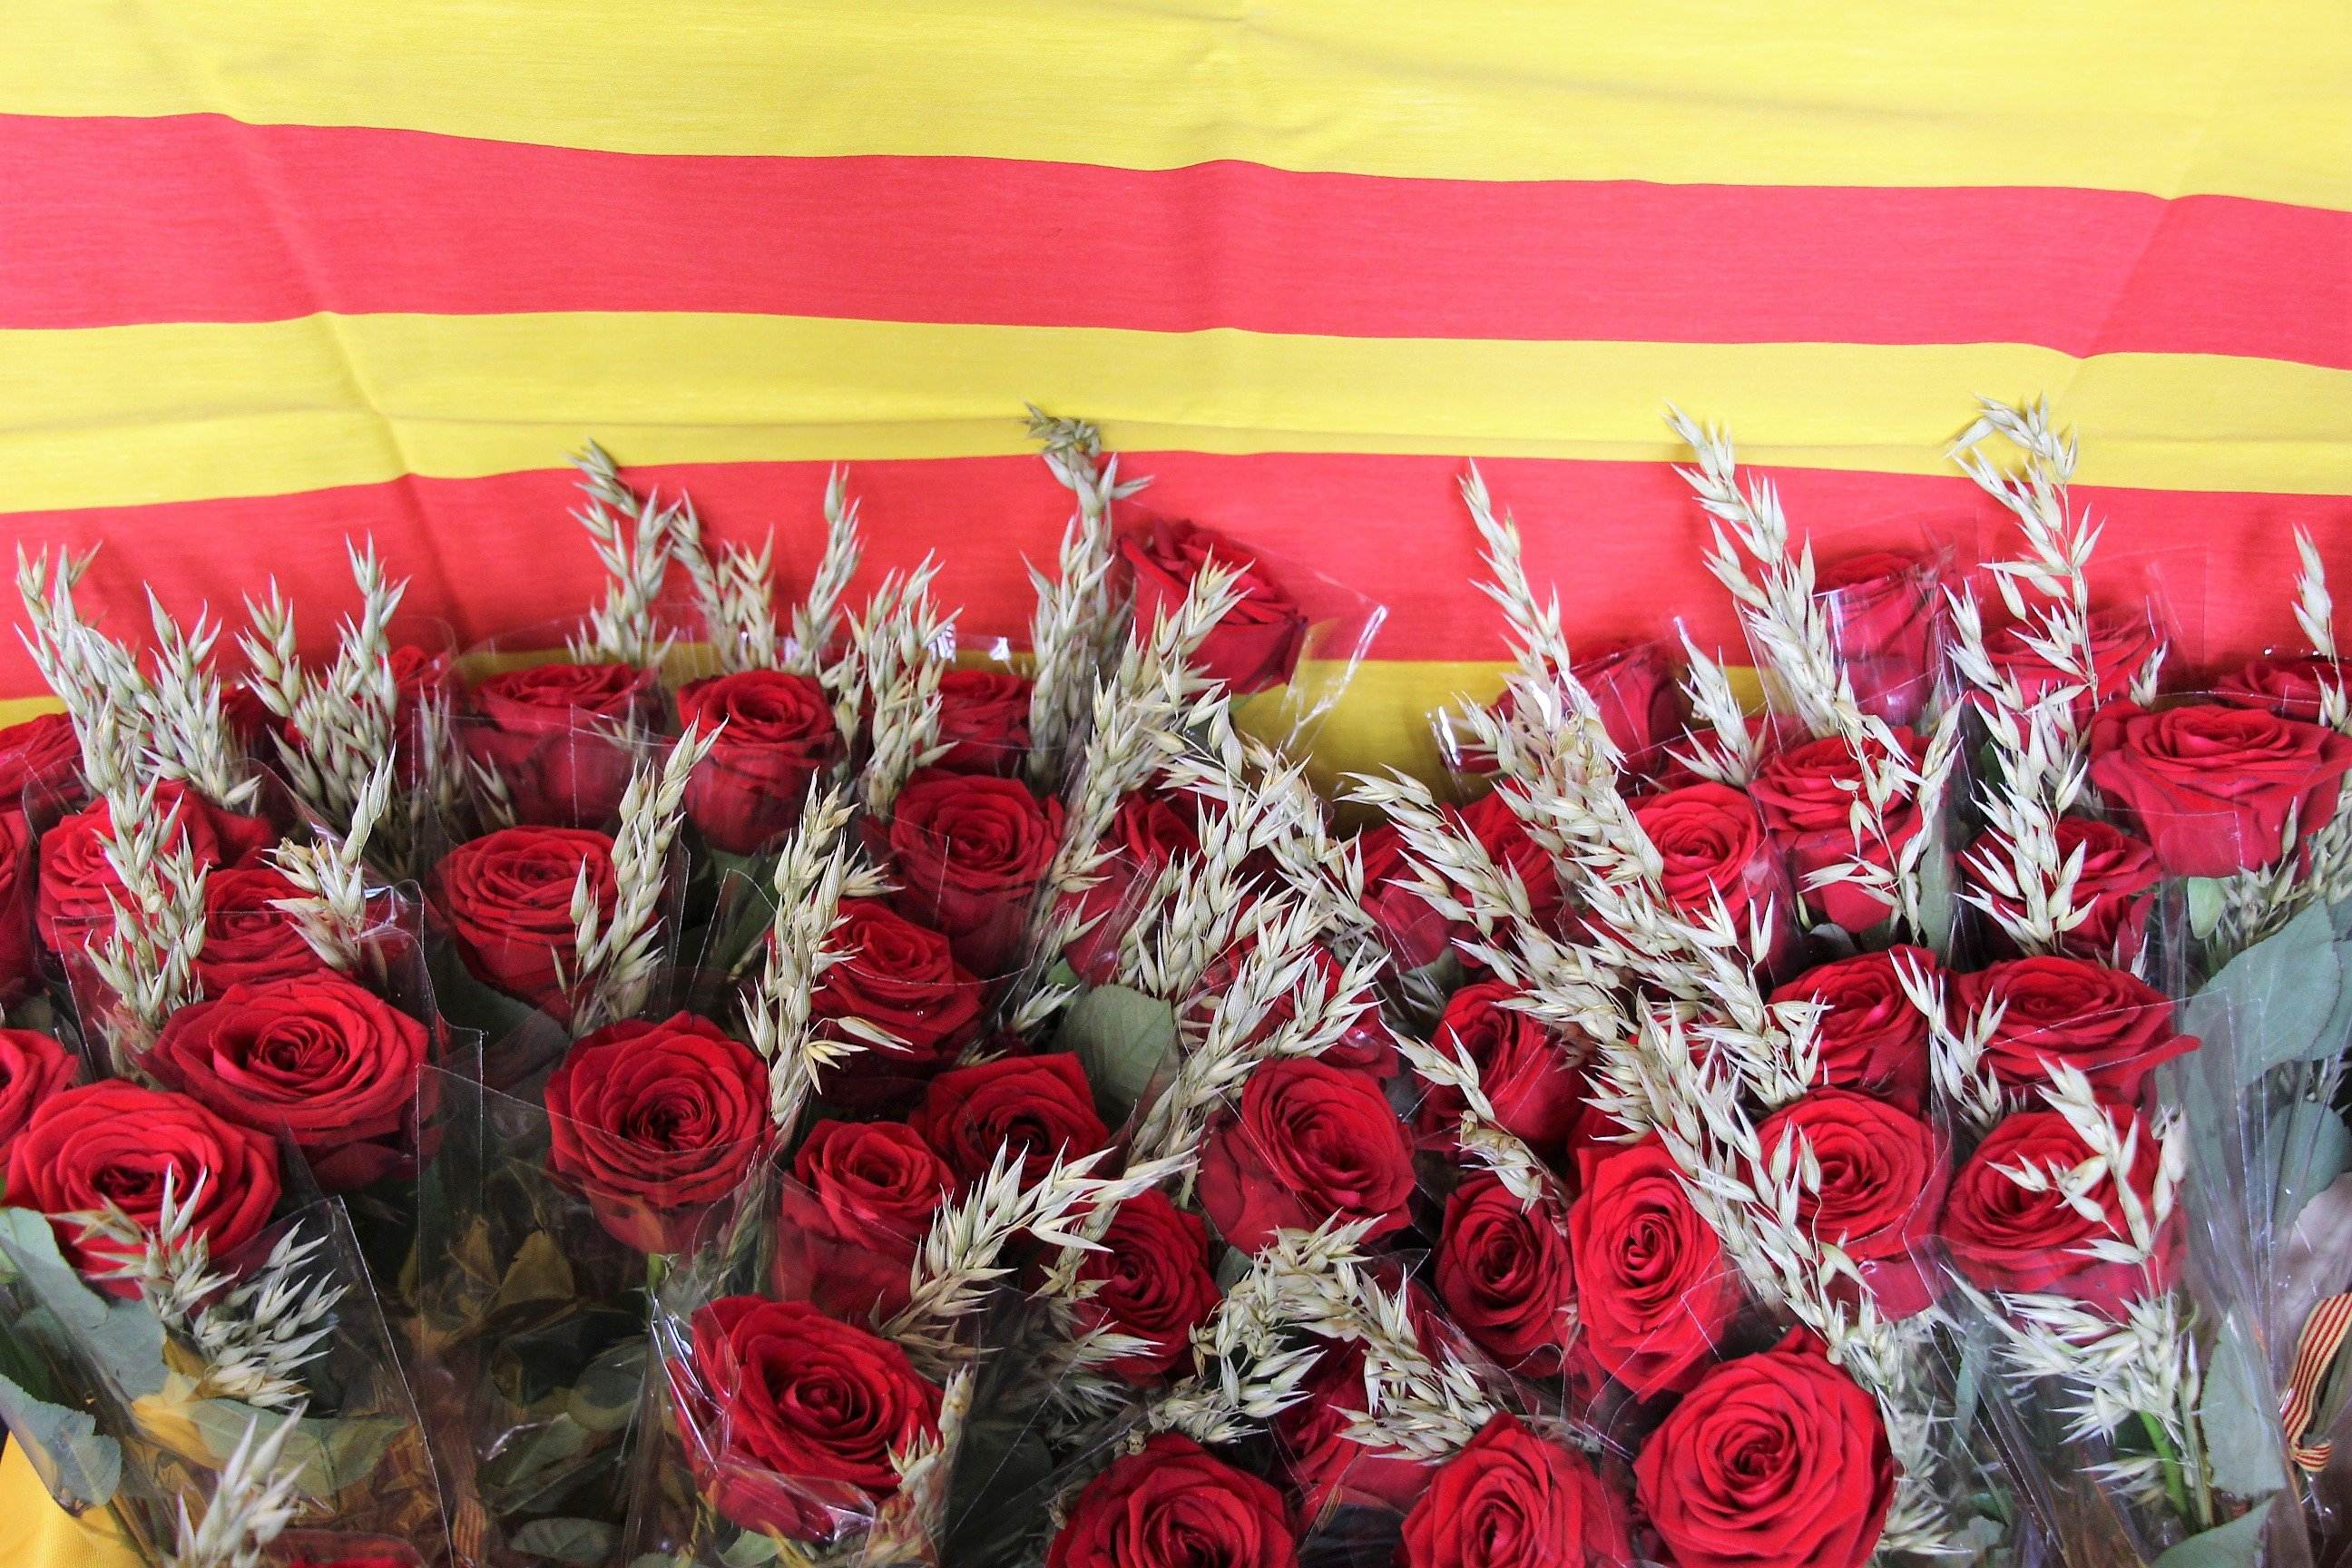 Sant Jordi, Catalan St George's Day, explained